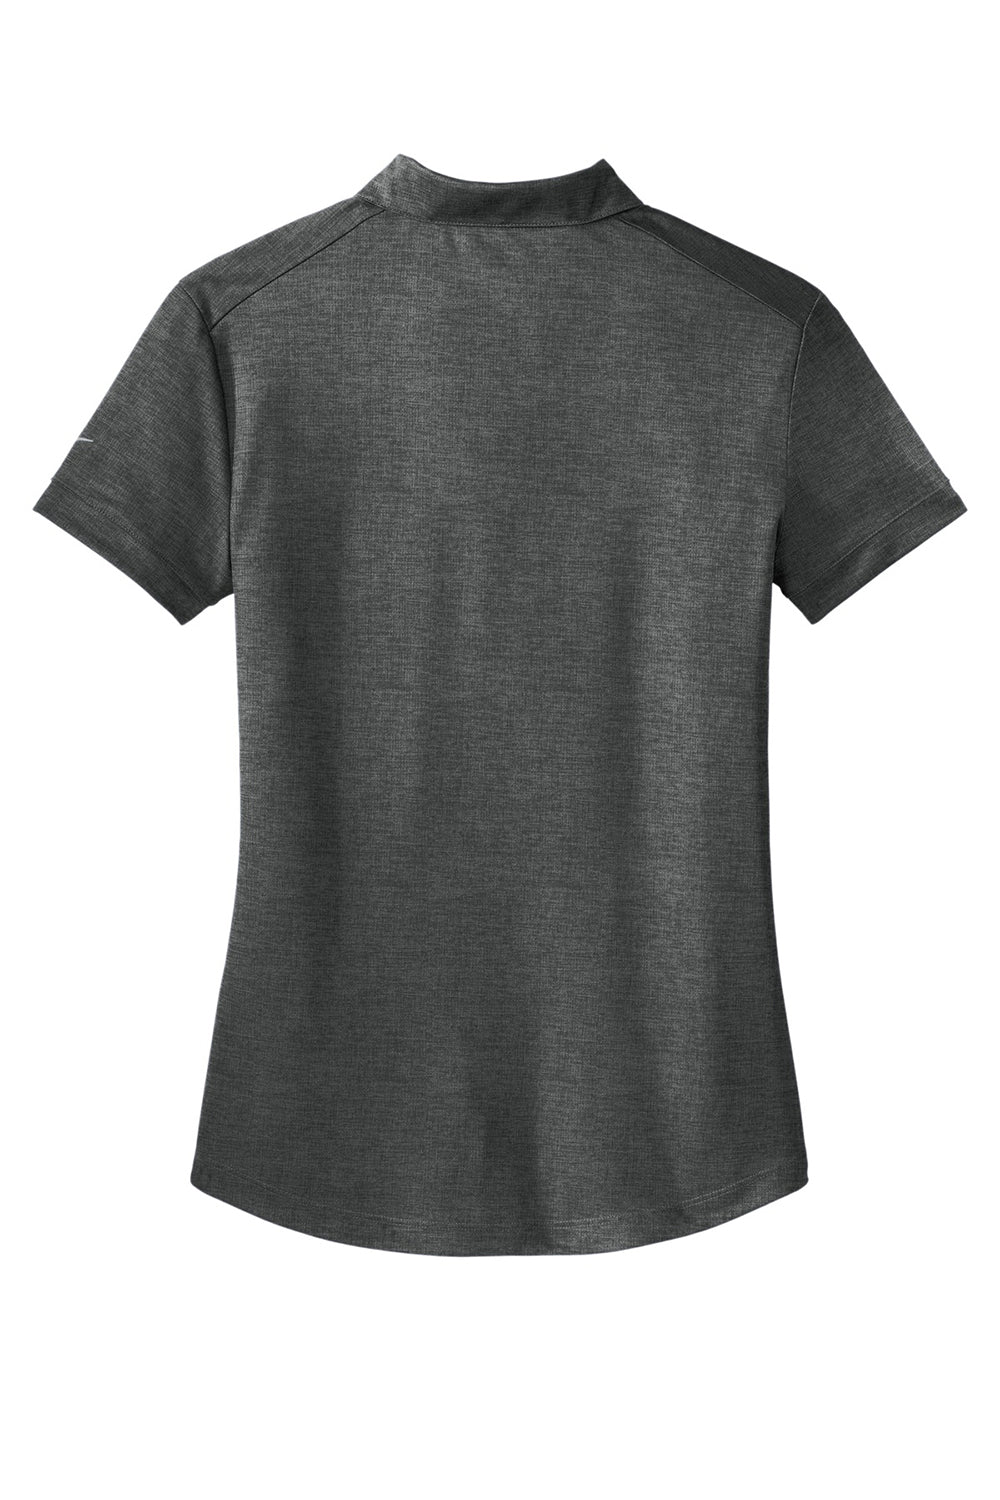 Nike 838961 Womens Dri-Fit Moisture Wicking Short Sleeve Polo Shirt Anthracite Grey Flat Back